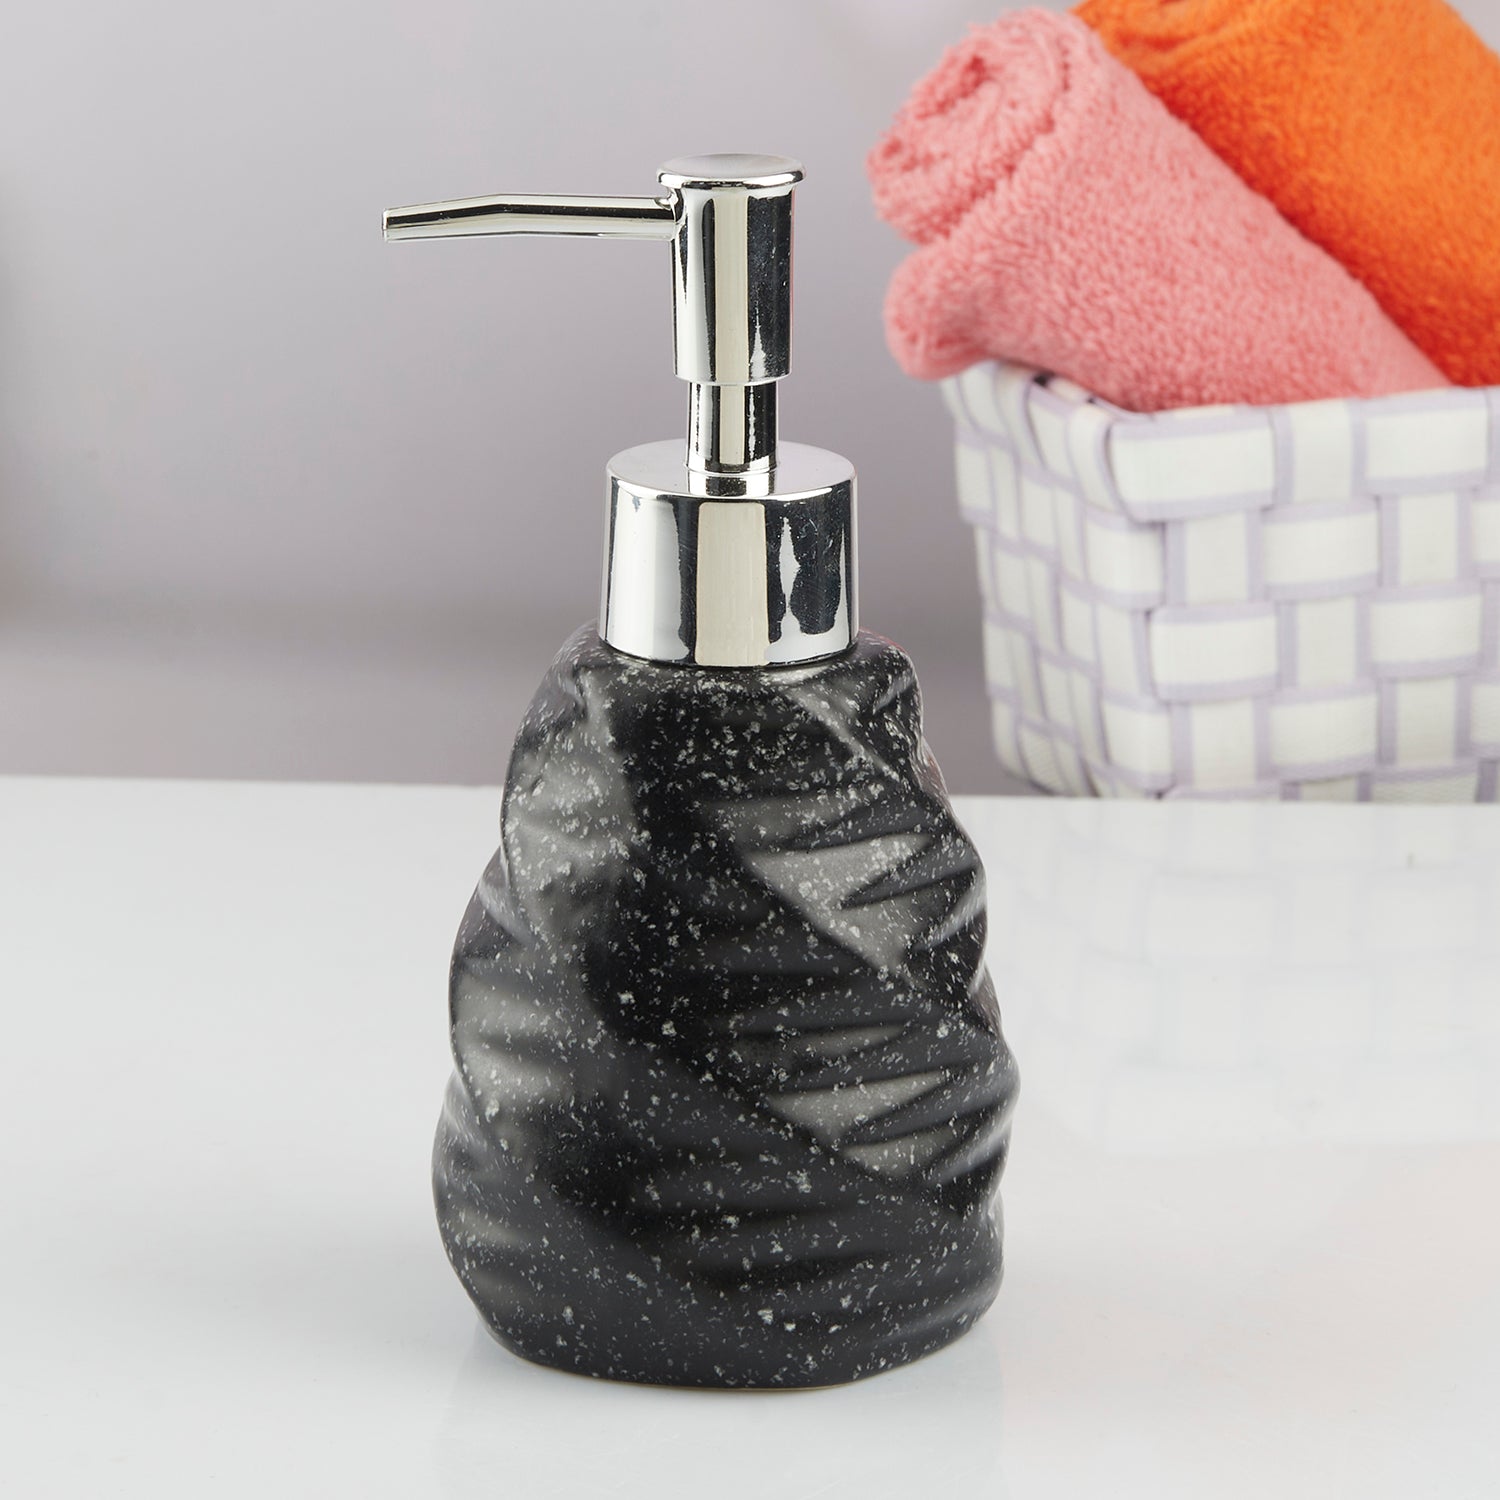 Ceramic Soap Dispenser liquid handwash pump for Bathroom, Set of 1, Black (10737)